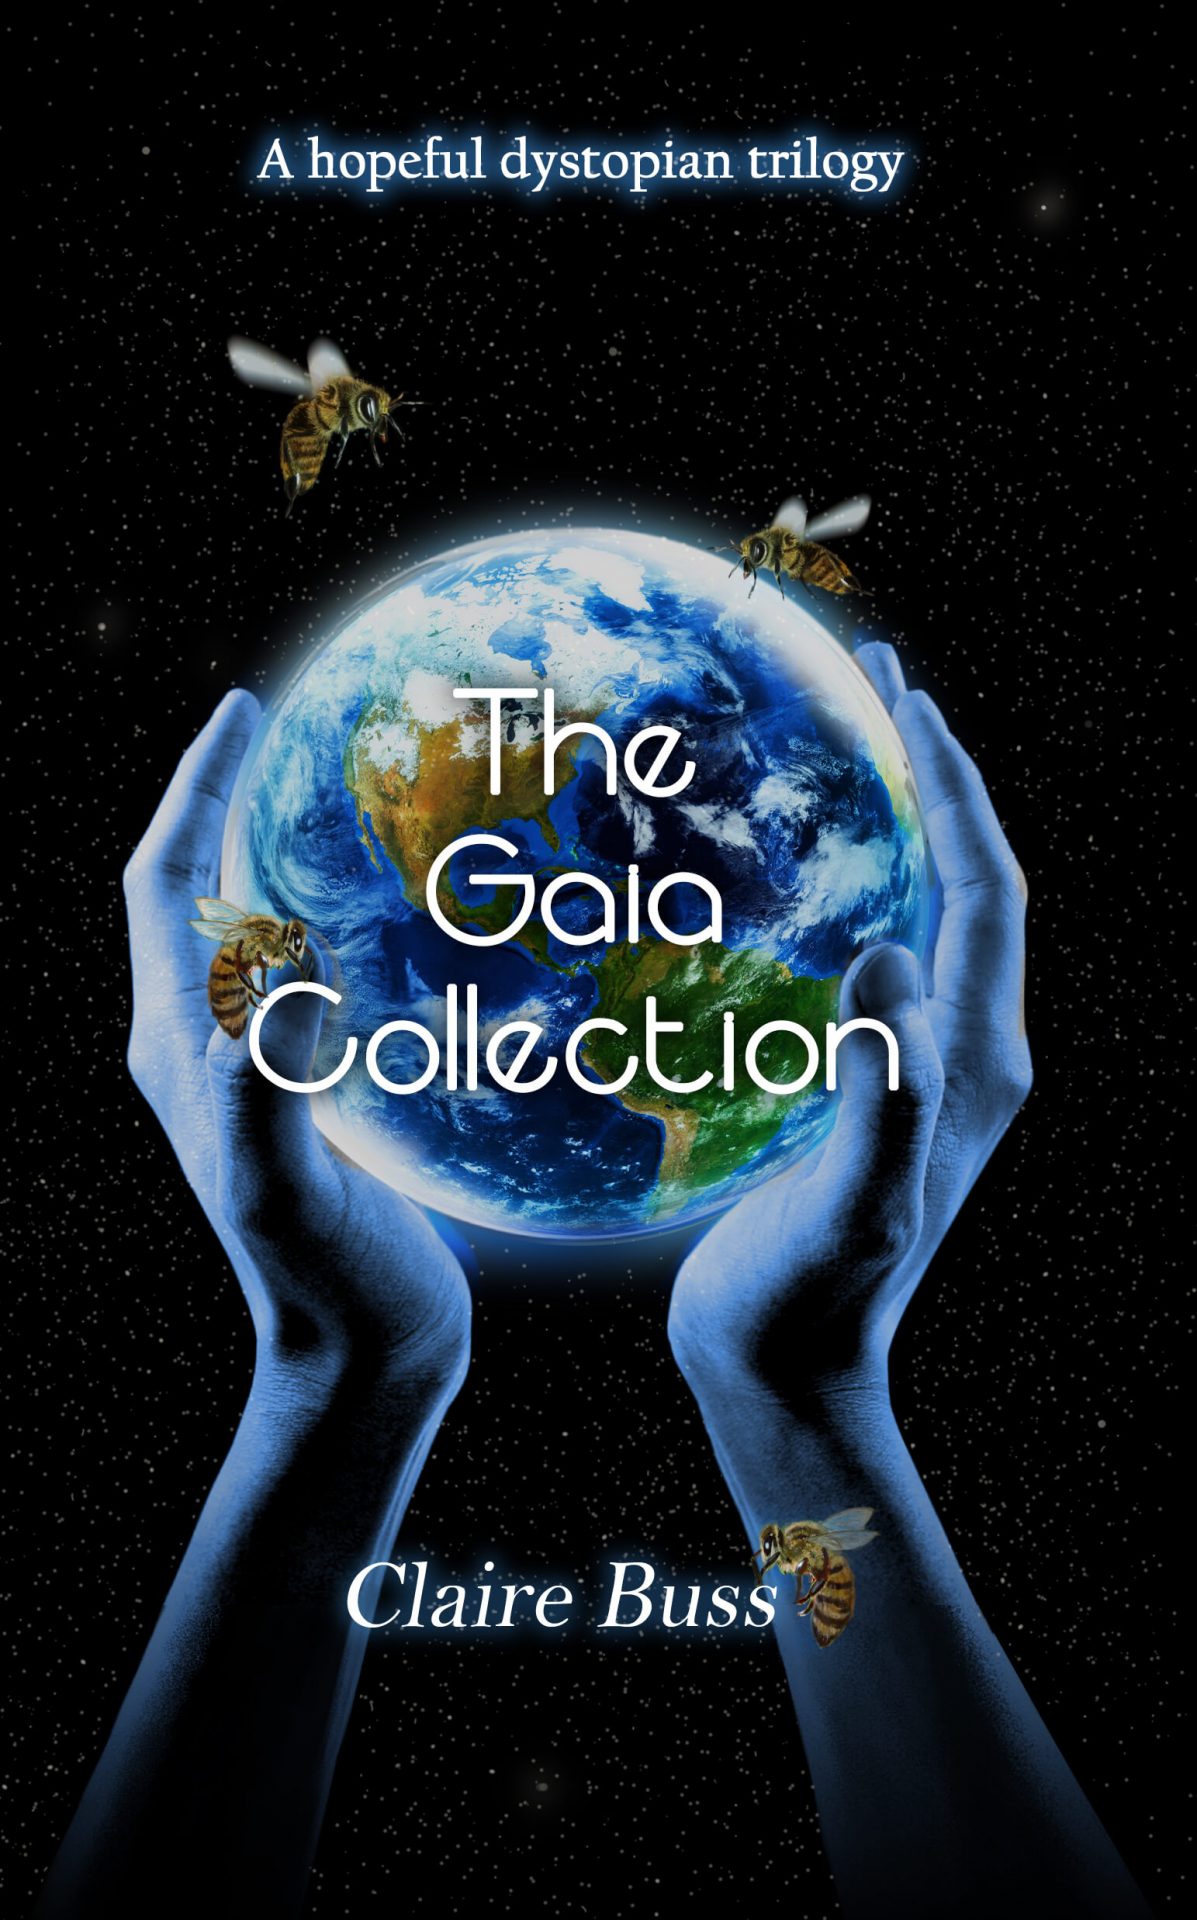 The Gaia Wars by Kenneth G. Bennett